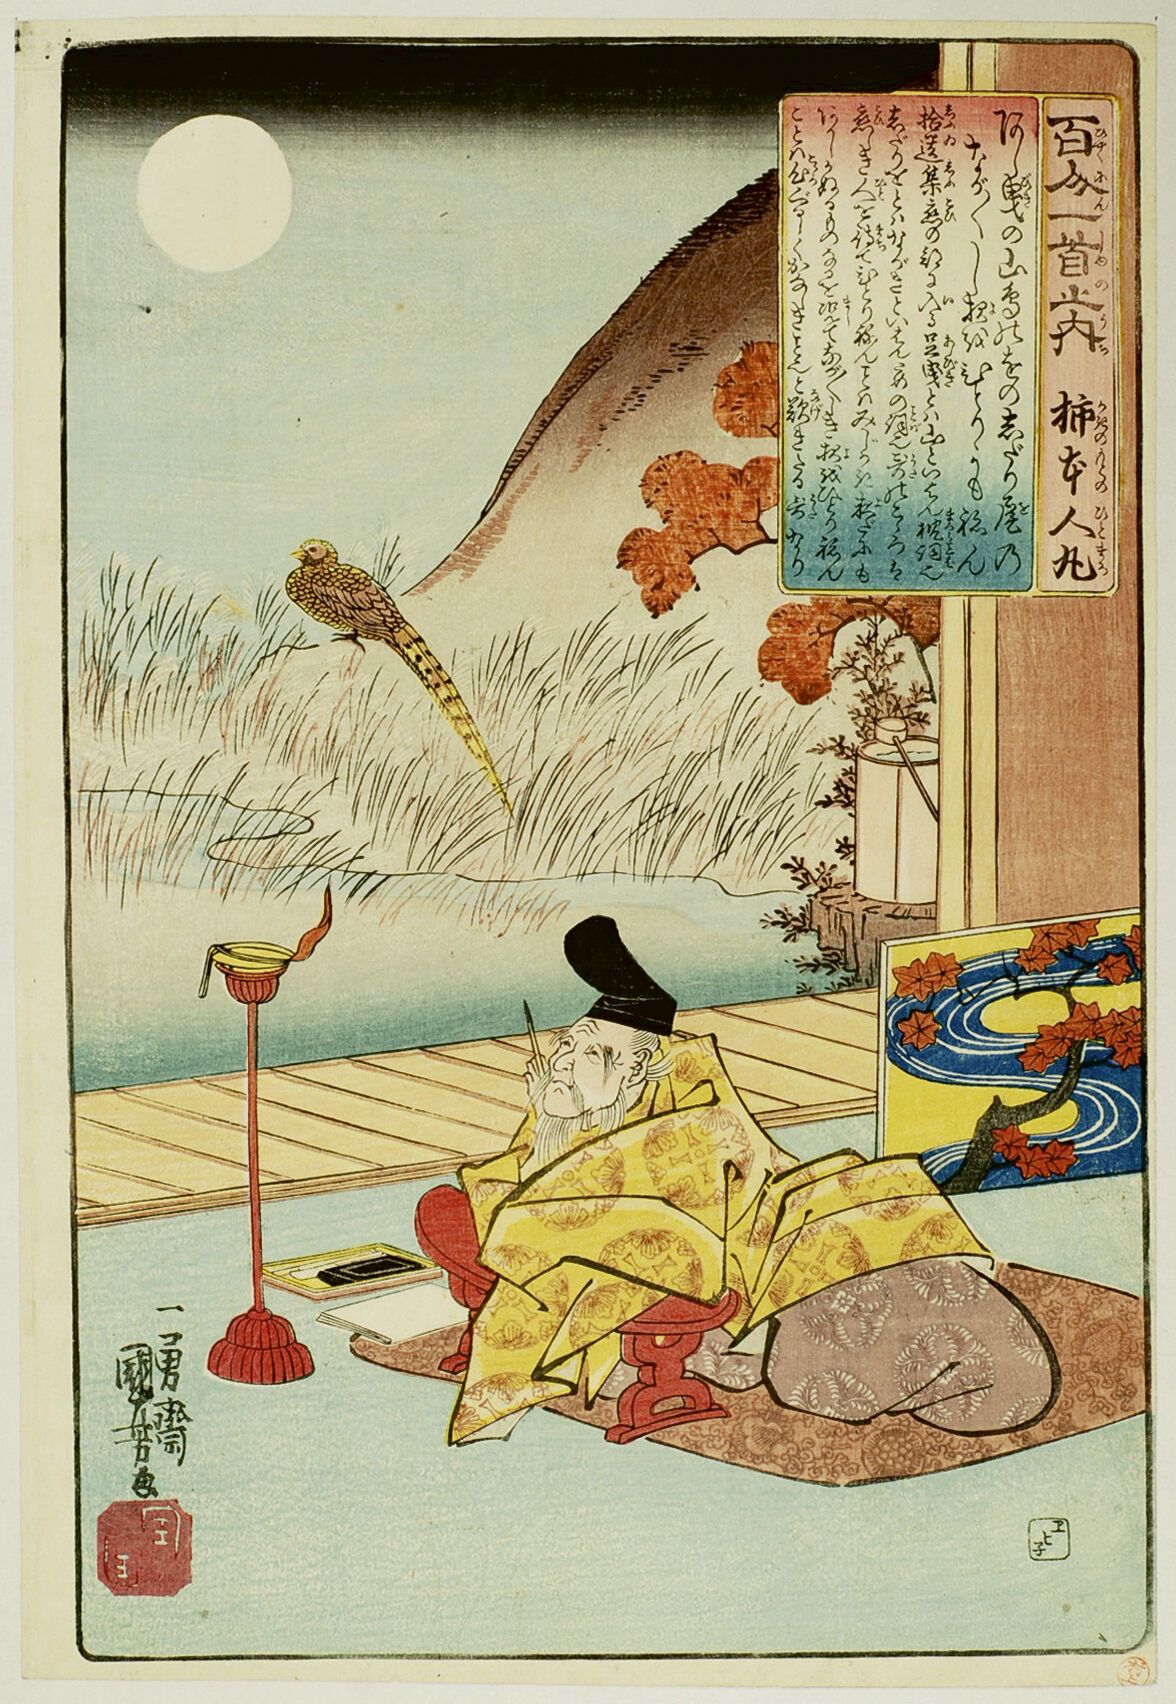 Null 宇都宫邦彦 (1797-1861)
百人一首》系列中的 "Oban tate-e"，板块为 "Kakinomoto no Hitomaro"，"年老的&hellip;